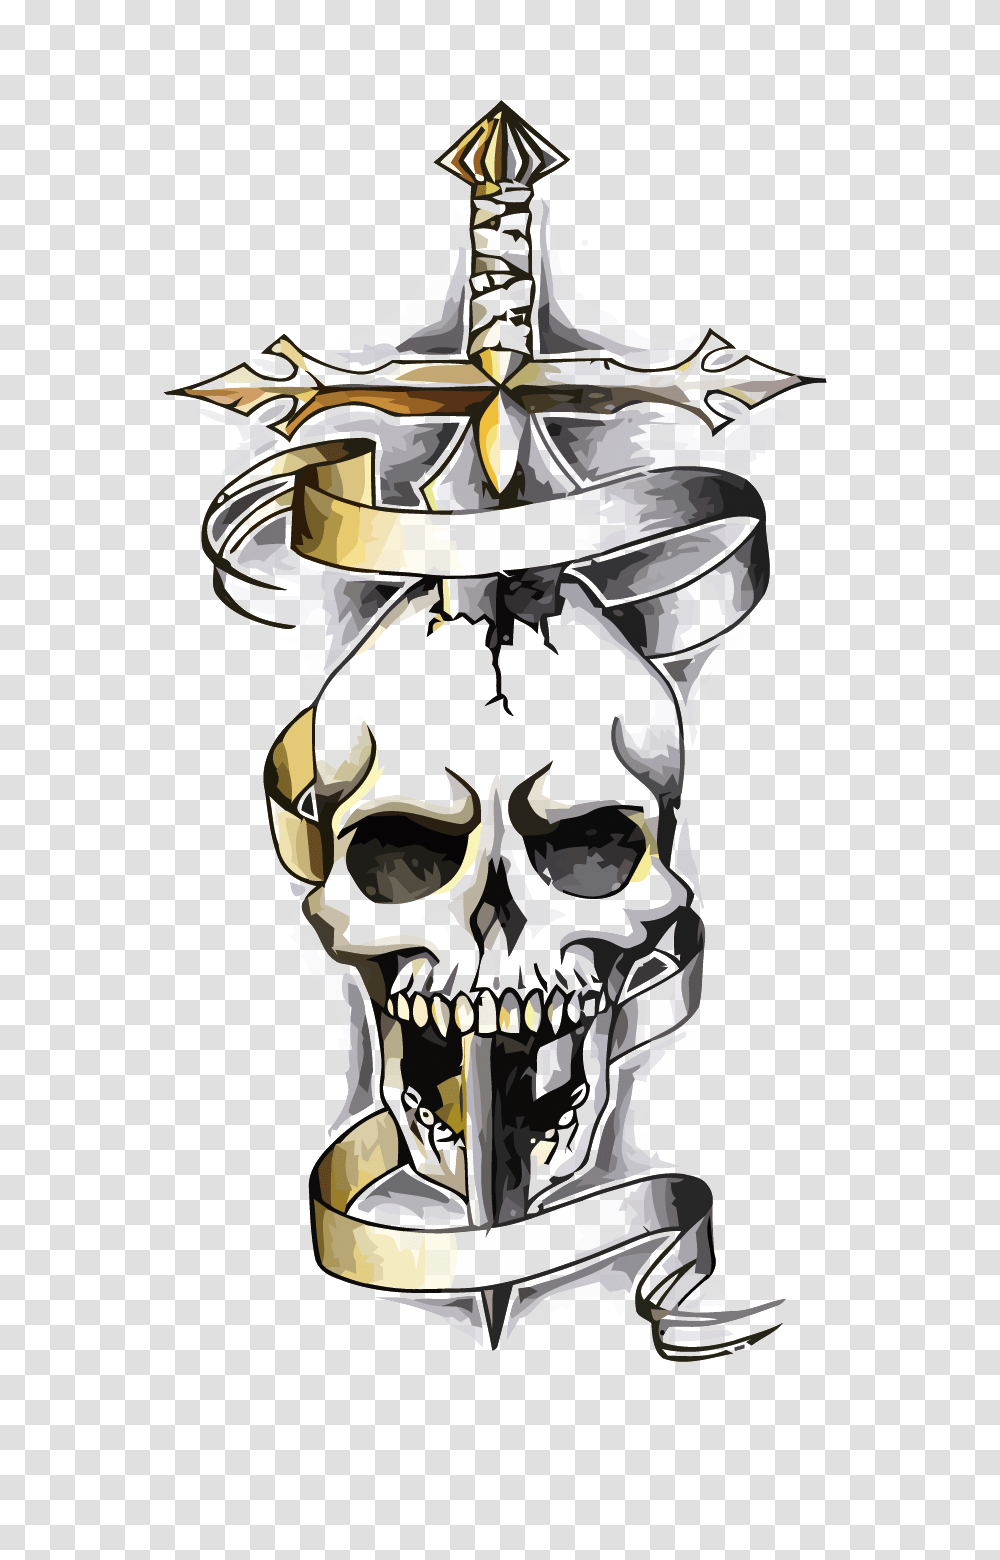 Dragon Vector Tattoo Skeleton Skull Dragon Vector Skull And Dagger Tattoo, Sunglasses, Accessories, Accessory, Mask Transparent Png